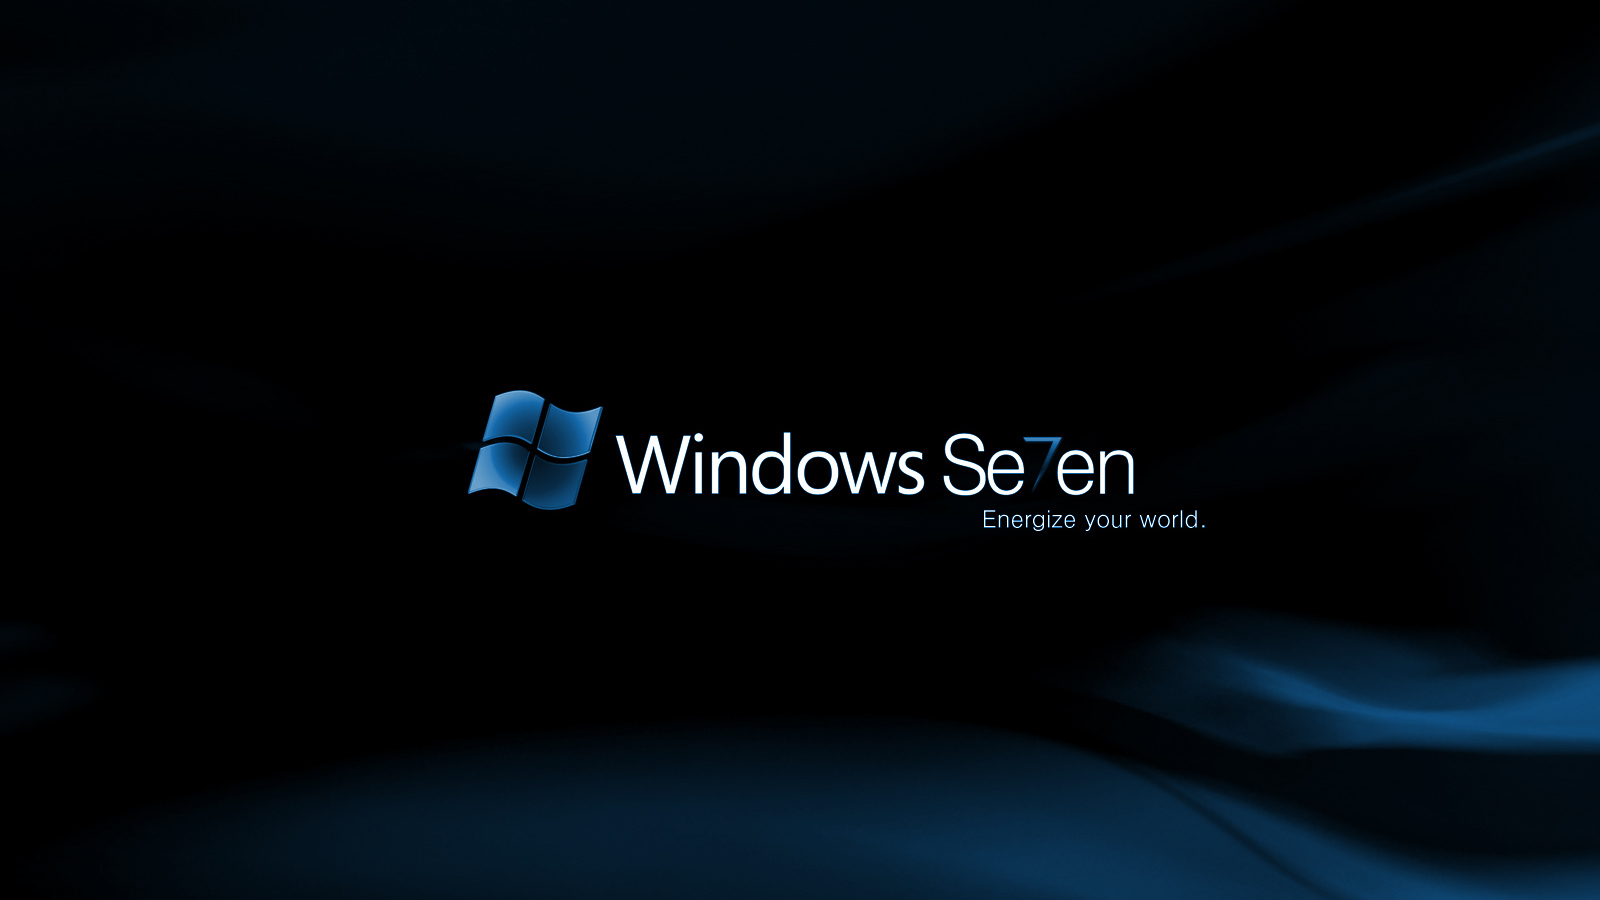 Microsoft windows 7